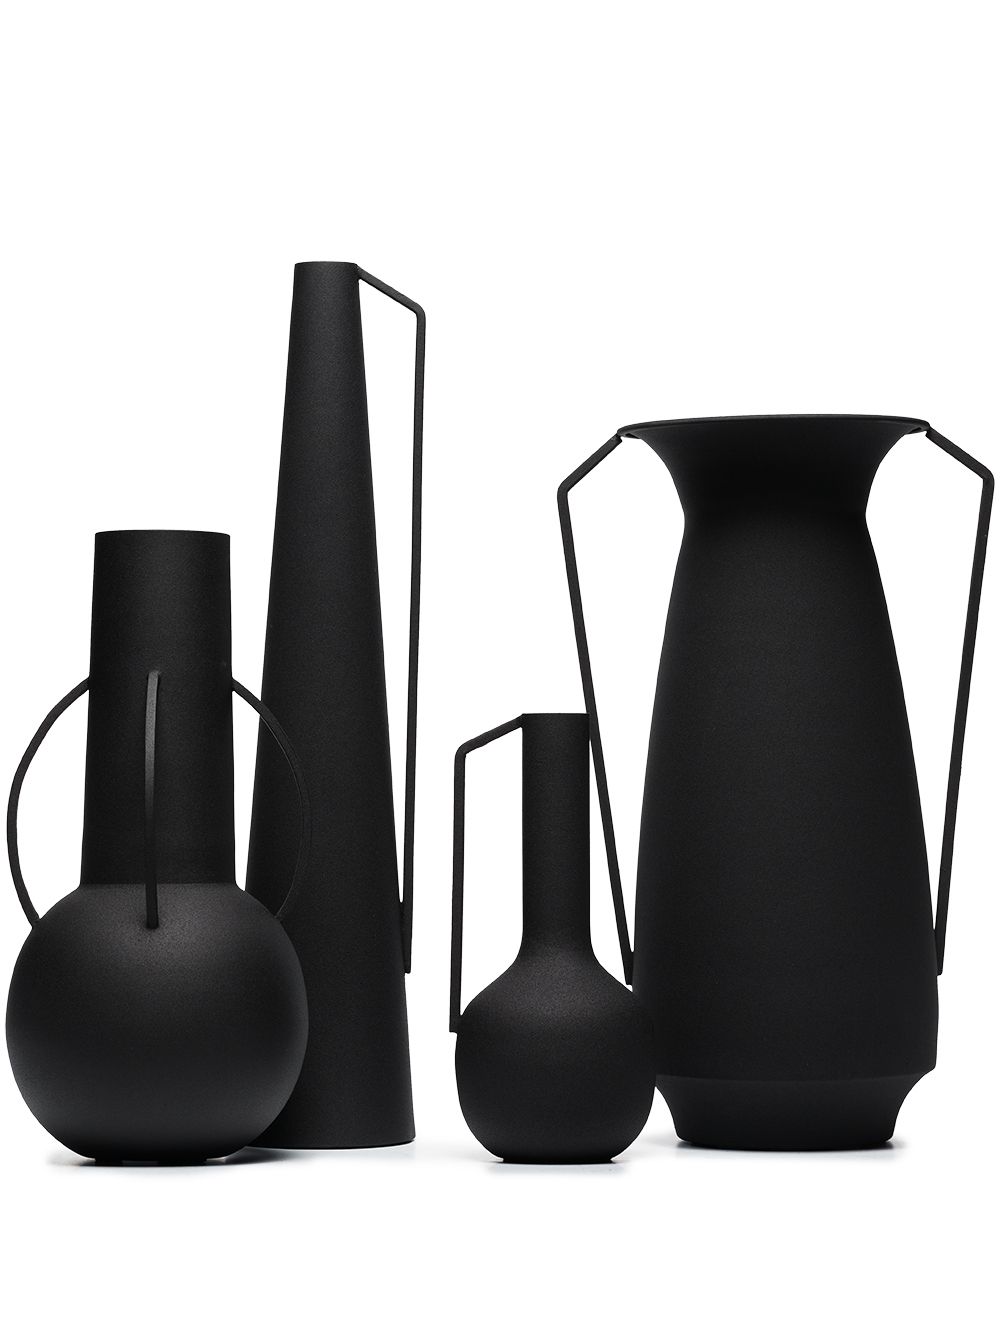 POLSPOTTEN Roman powder-coated vases (set of 4) - Black von POLSPOTTEN